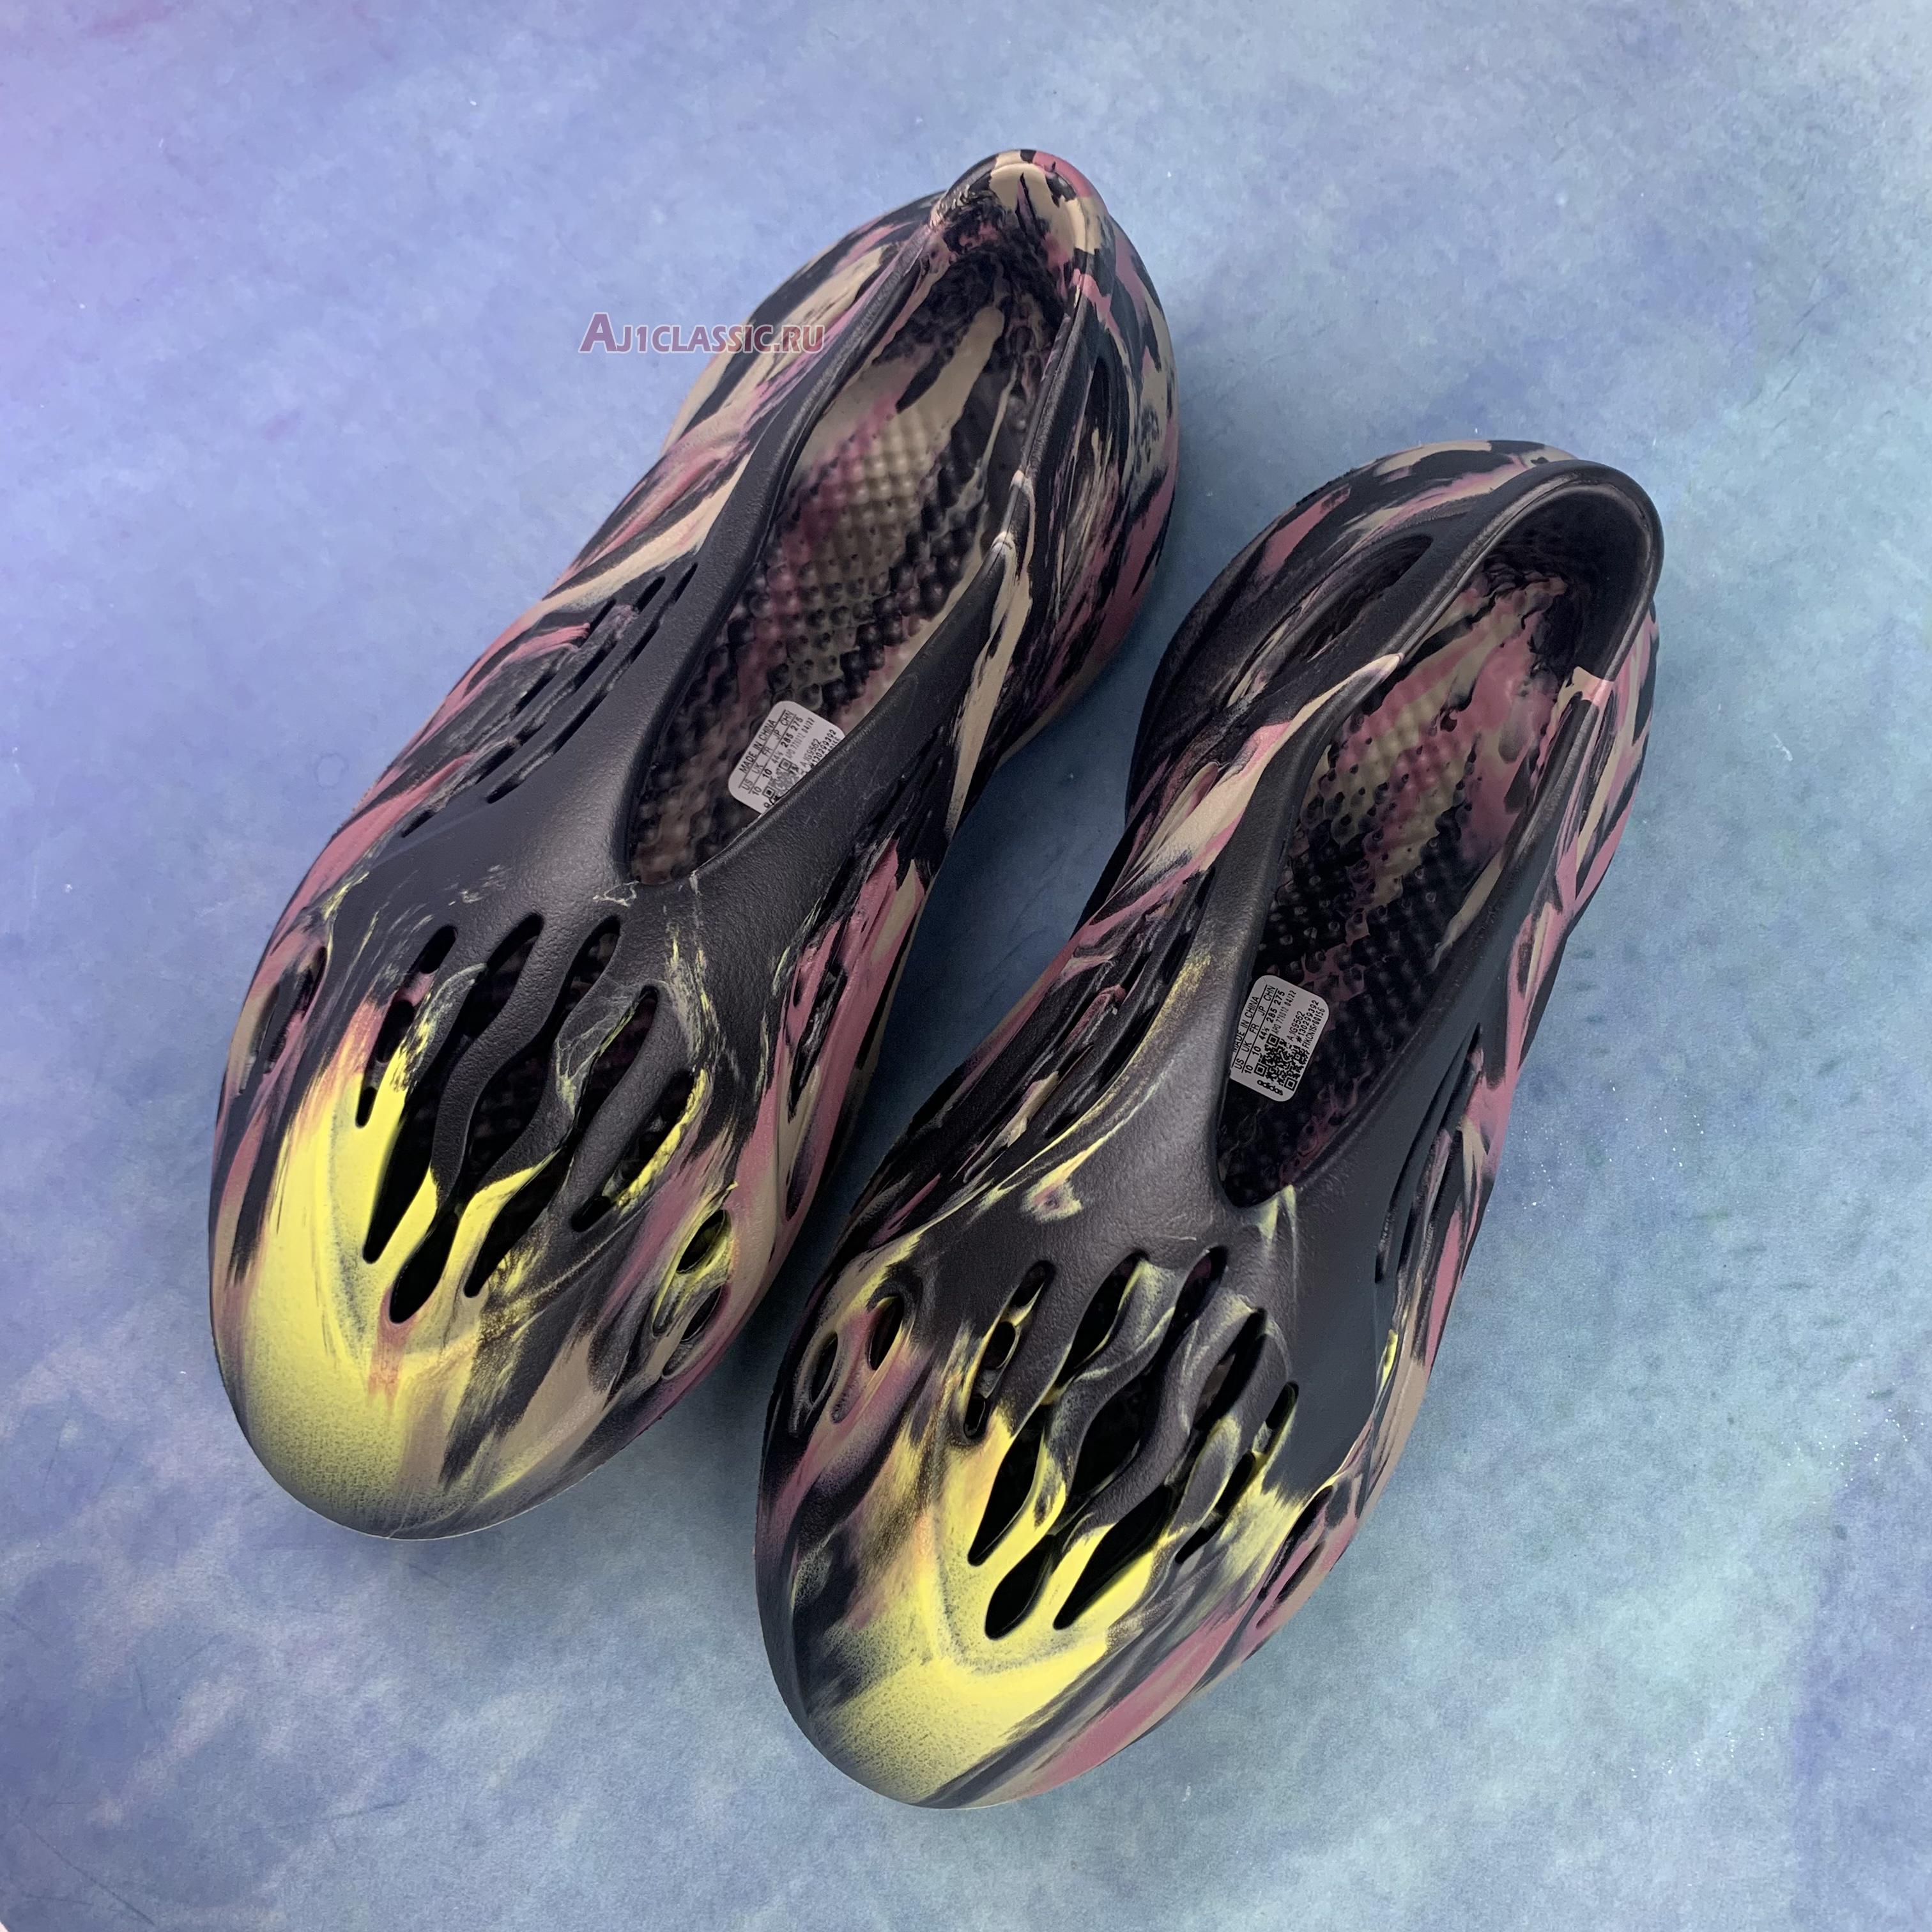 Adidas Yeezy Foam Runner MX Carbon IG9562 Mx Carbon/Mx Carbon/Mx Carbon Sneakers